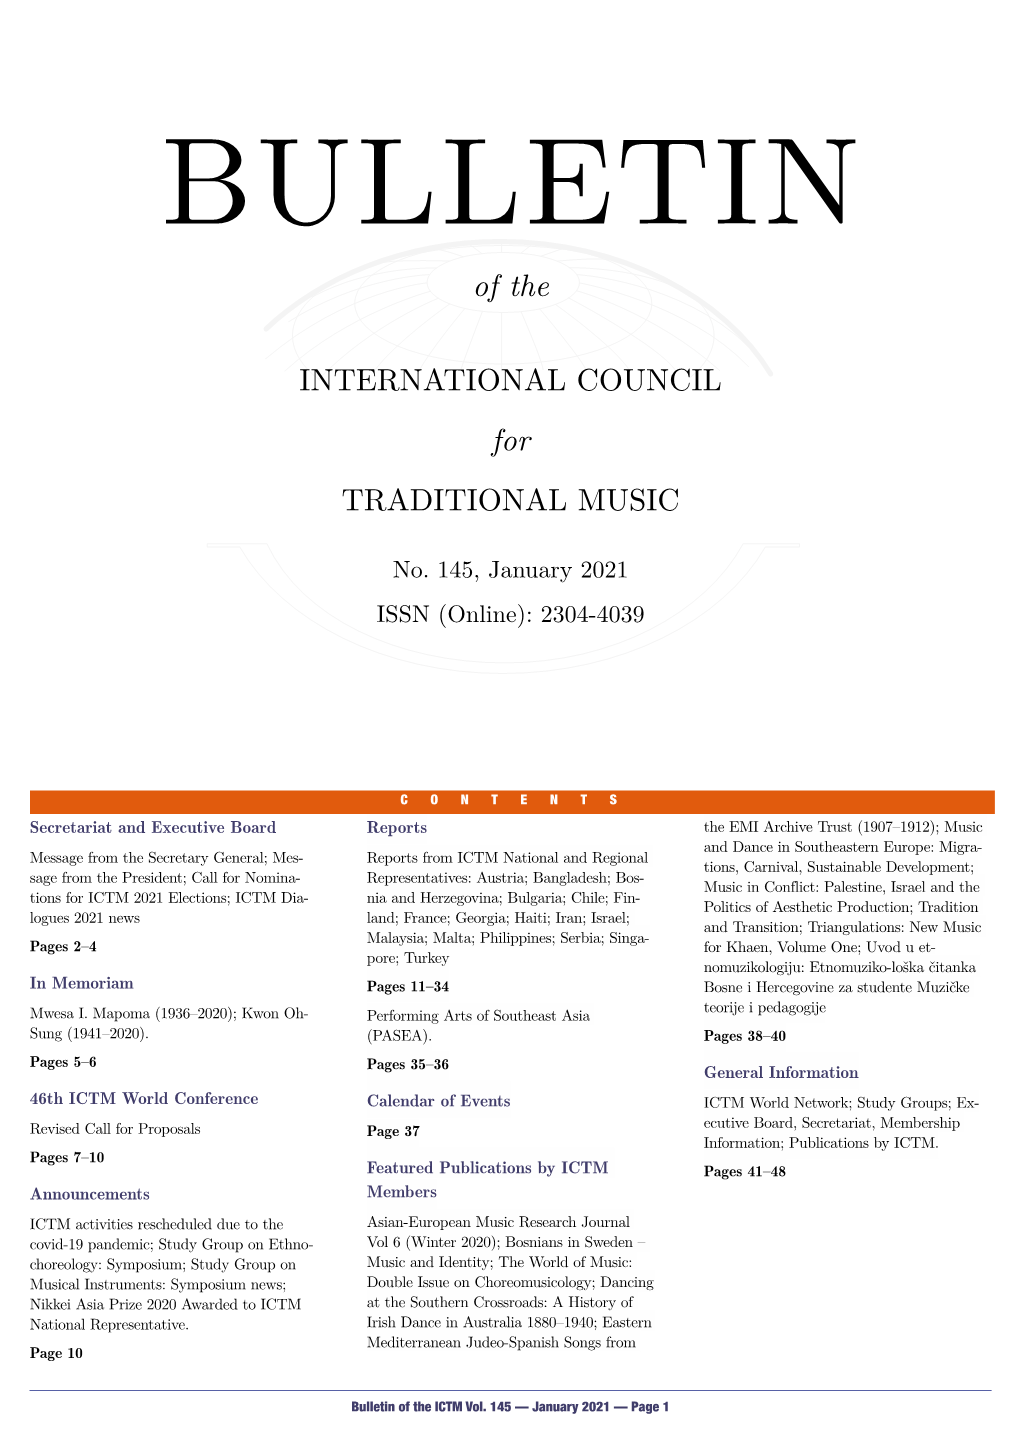 Bulletin of the ICTM Vol. 145 (January 2021)